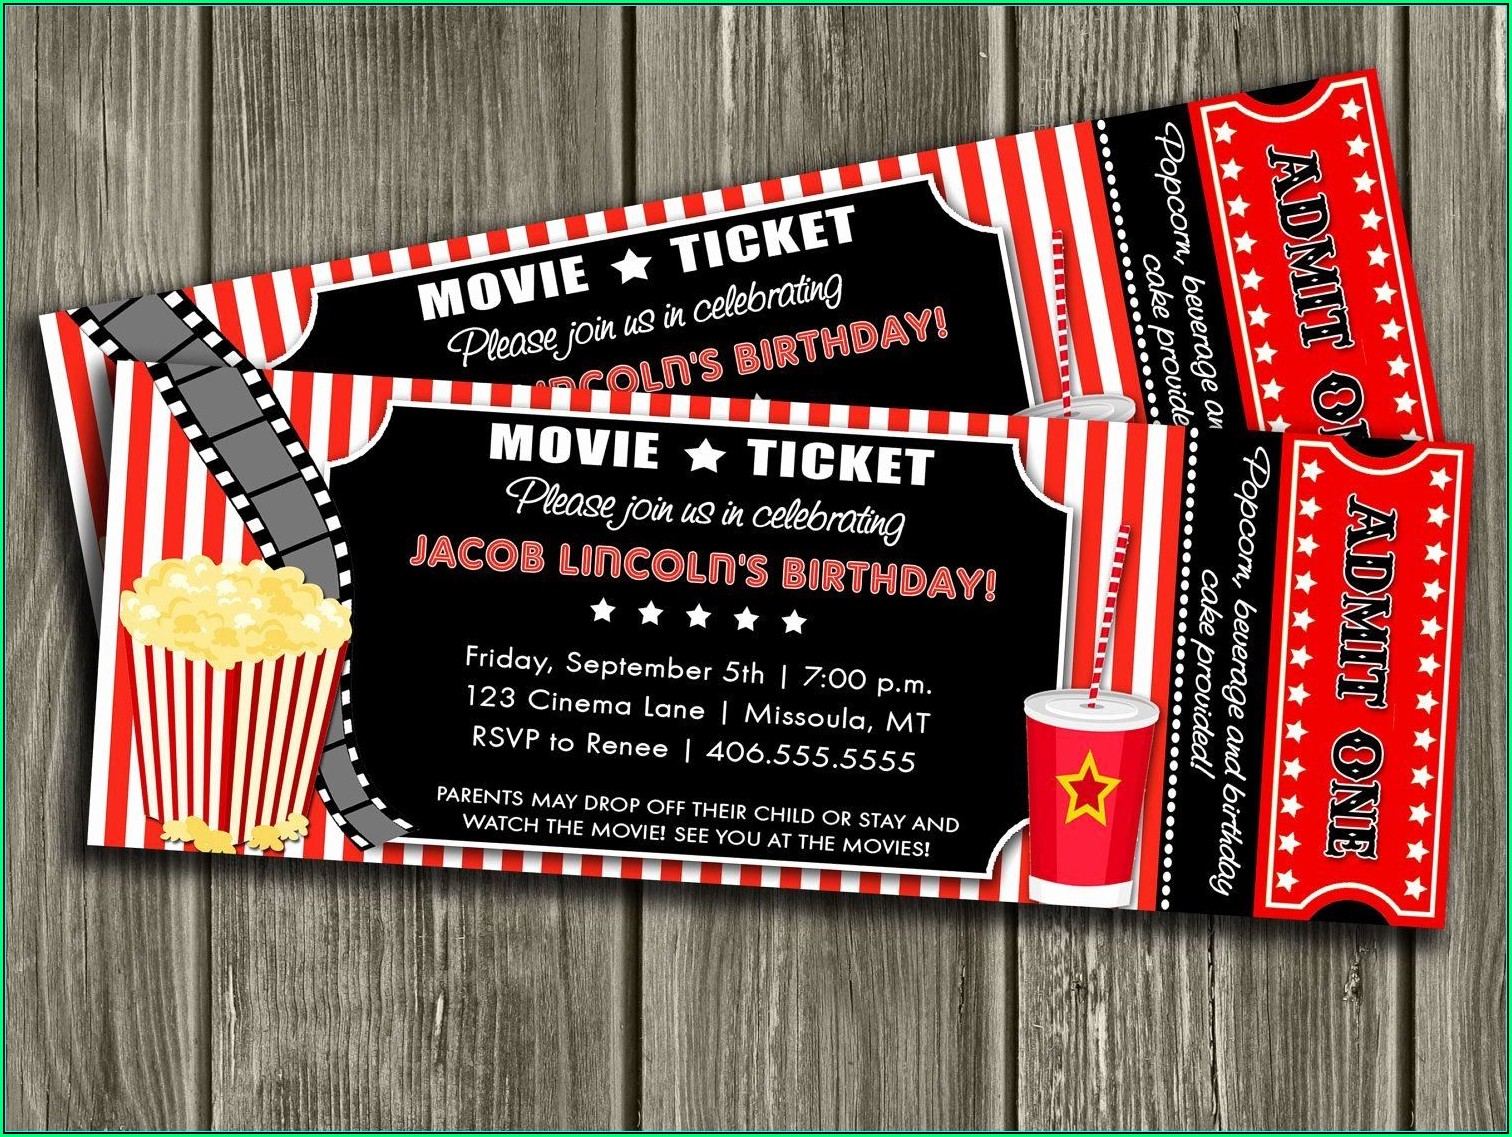 Movie Ticket Invitation Template Free